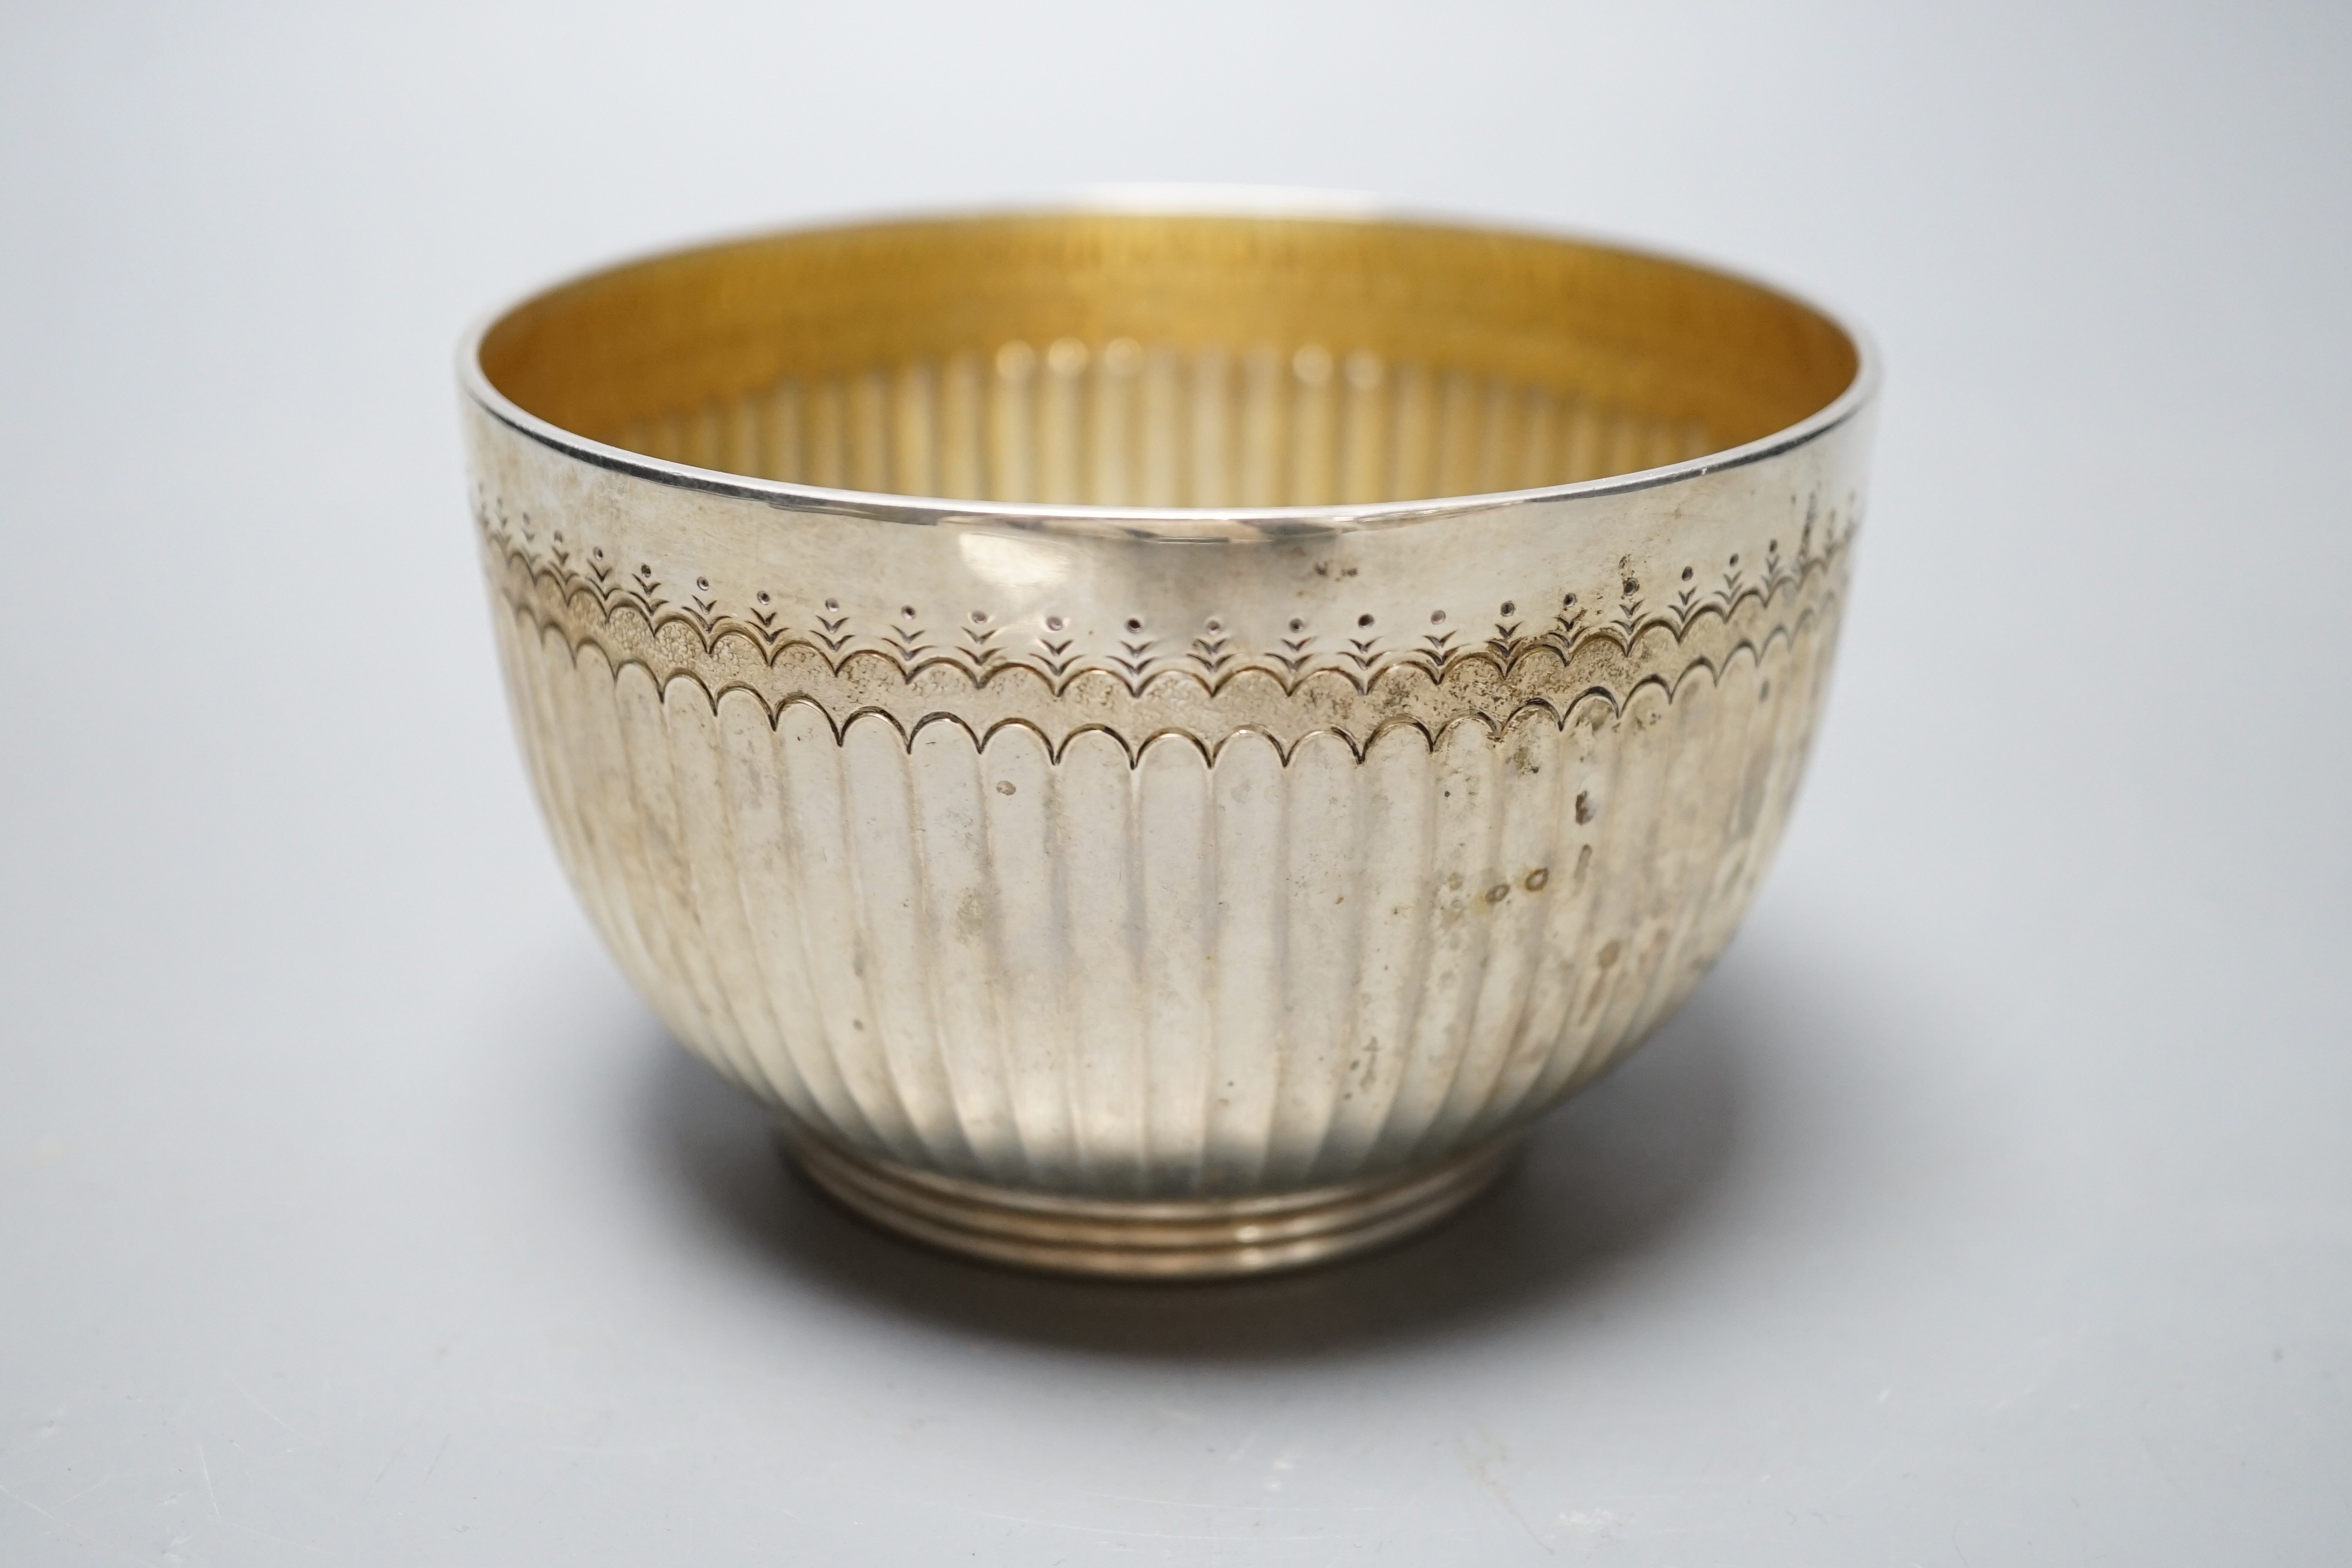 An Edwardian fluted silver sugar bowl, Thomas of New Bond Street, London, 1902, diameter 11.2cm, 8.9oz.